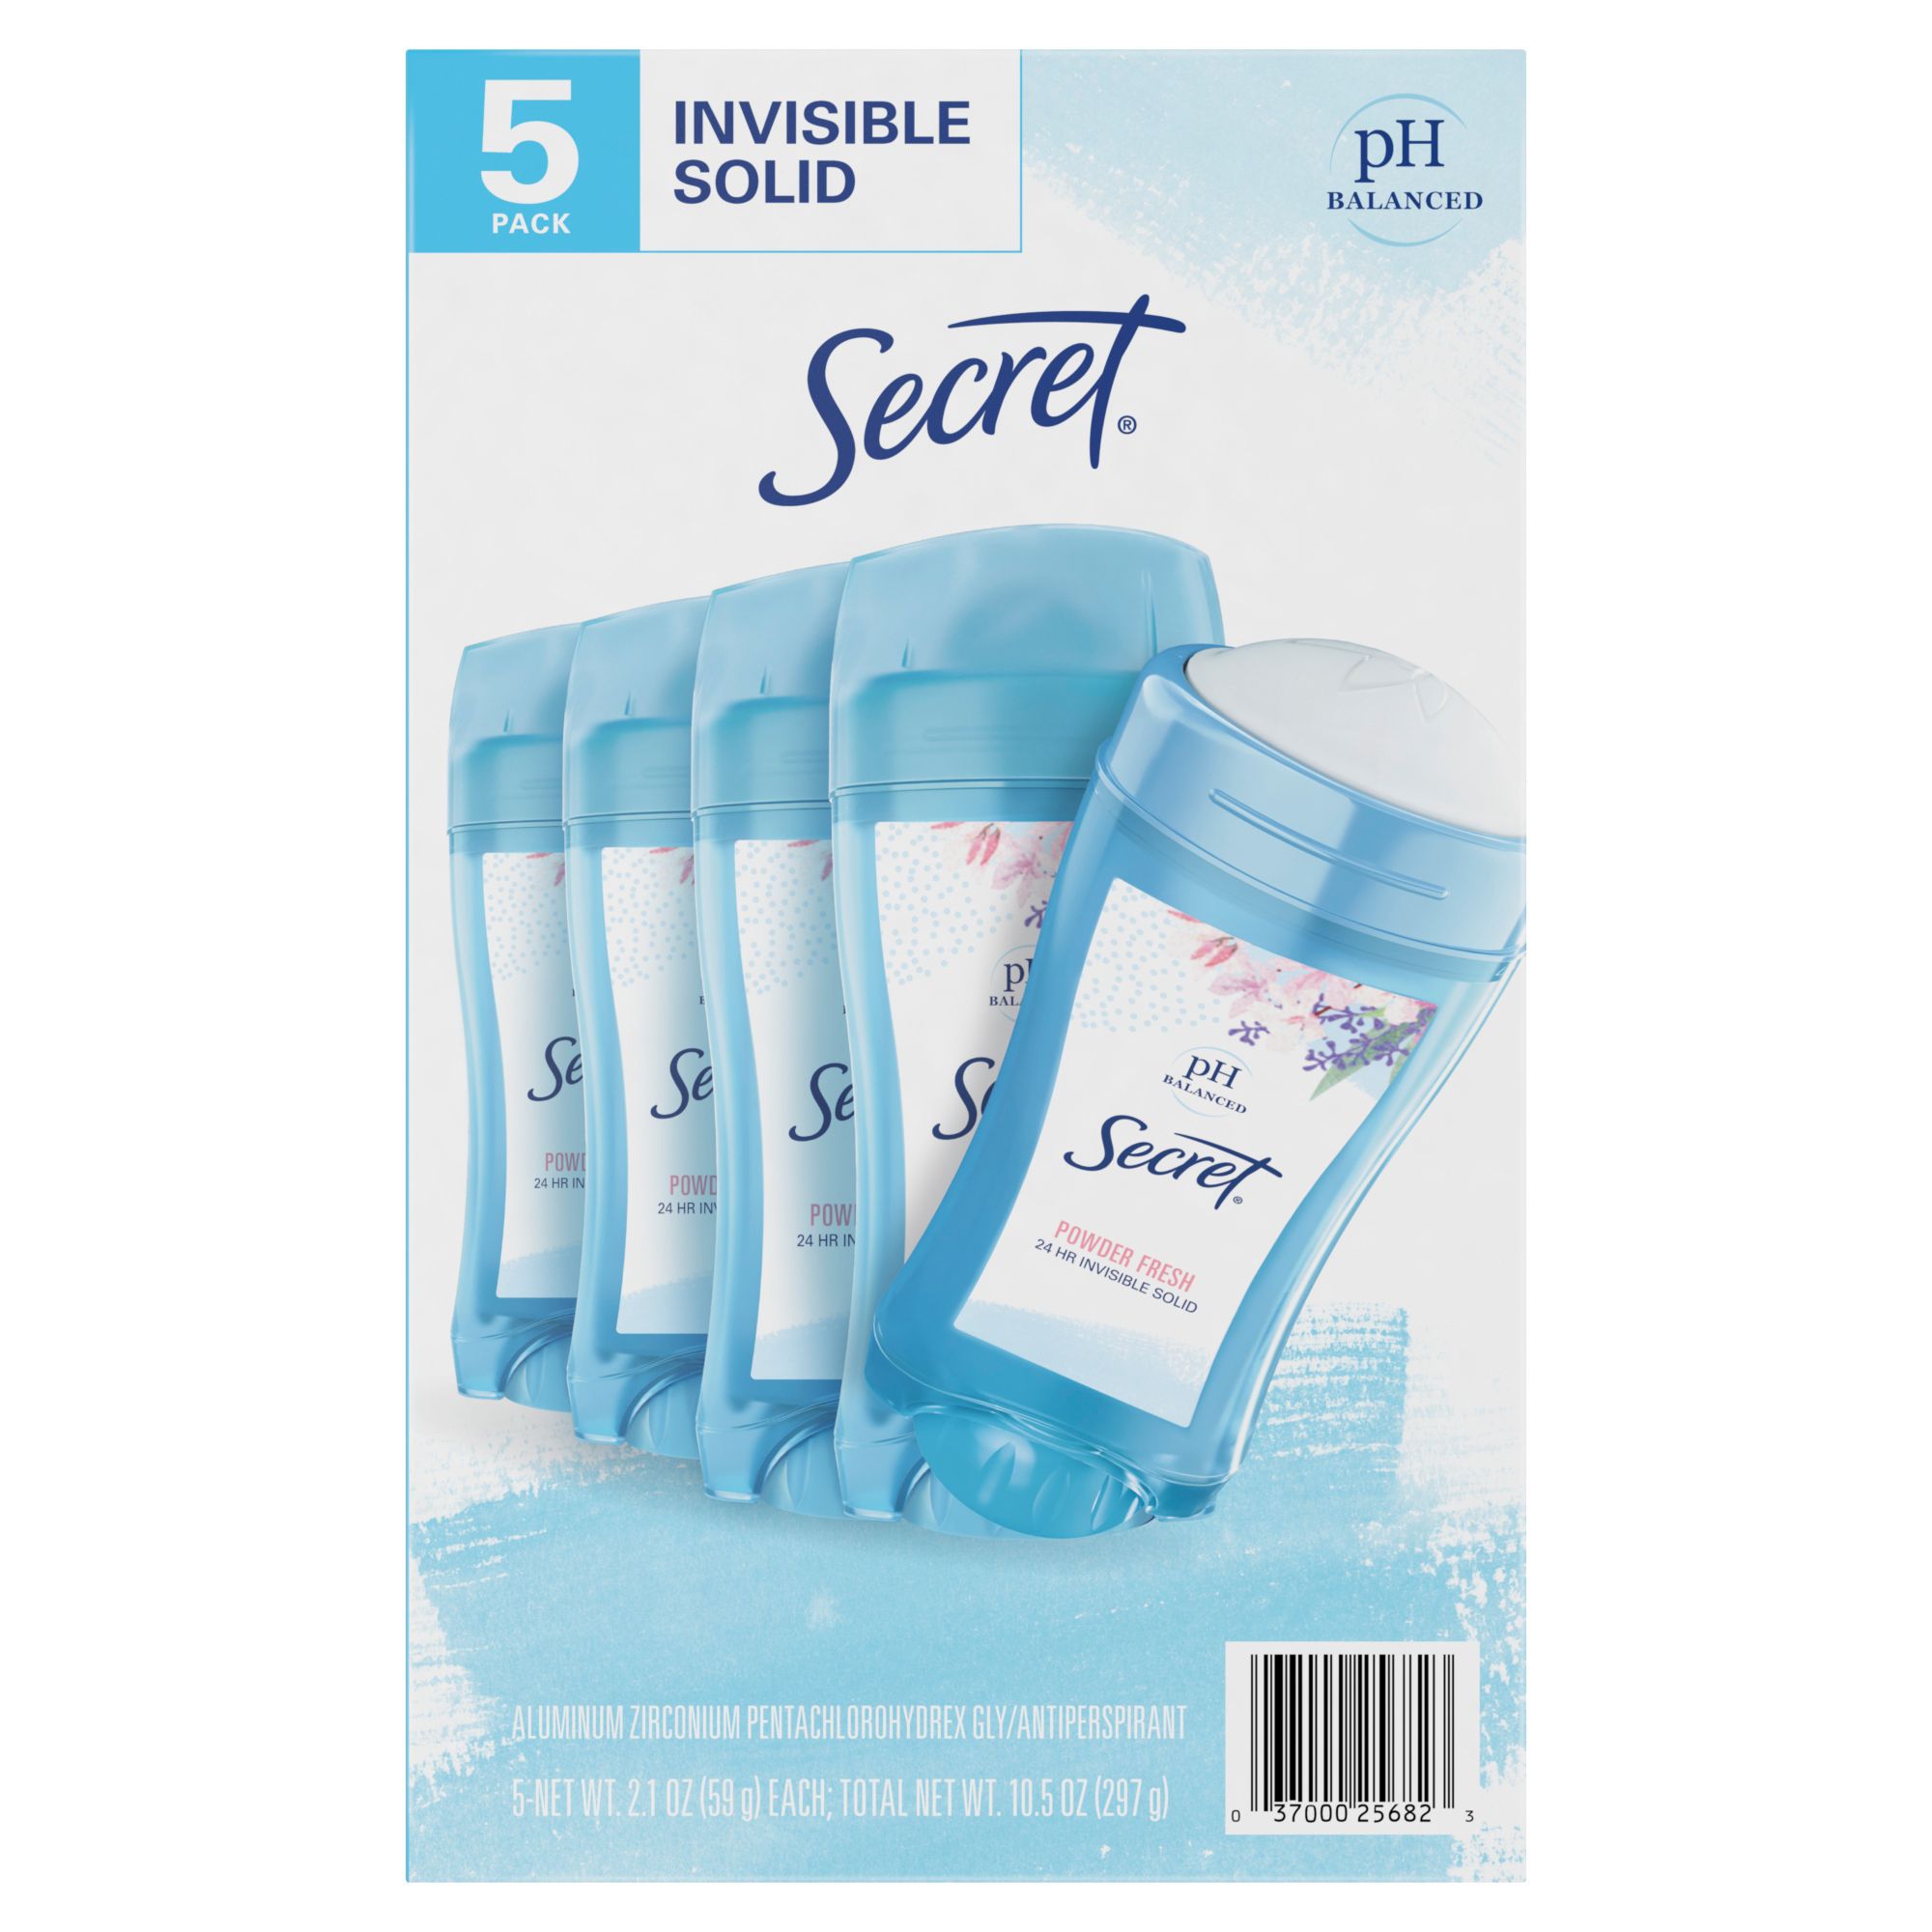 Secret Invisible Solid Antiperspirant and Deodorant